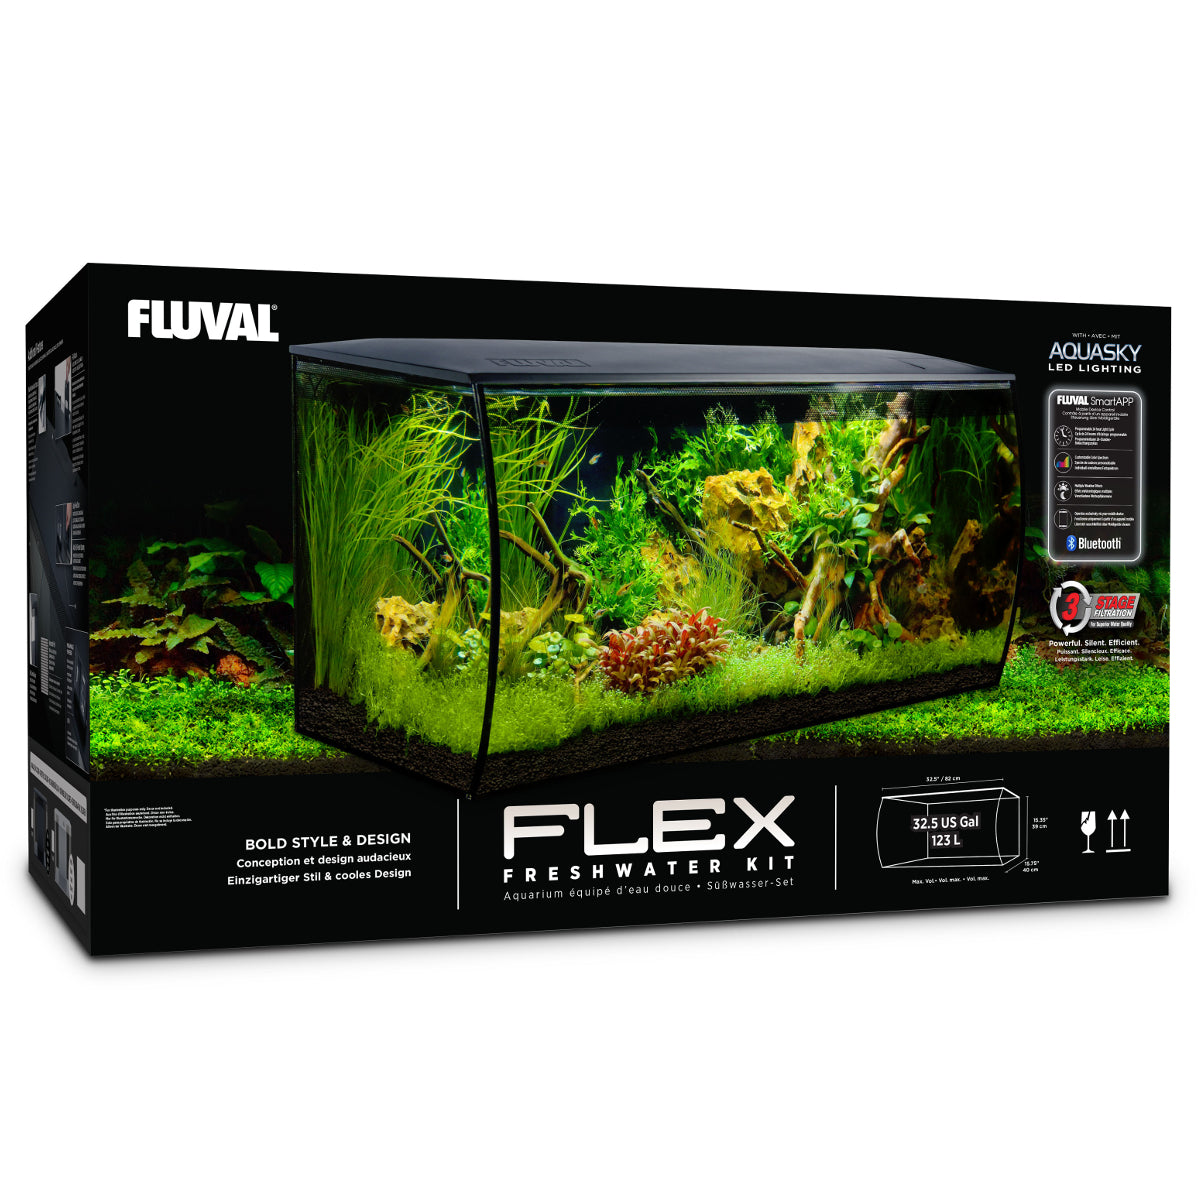 Fluval Flex 123L Aquarium Black with Aquasky LED Lighting